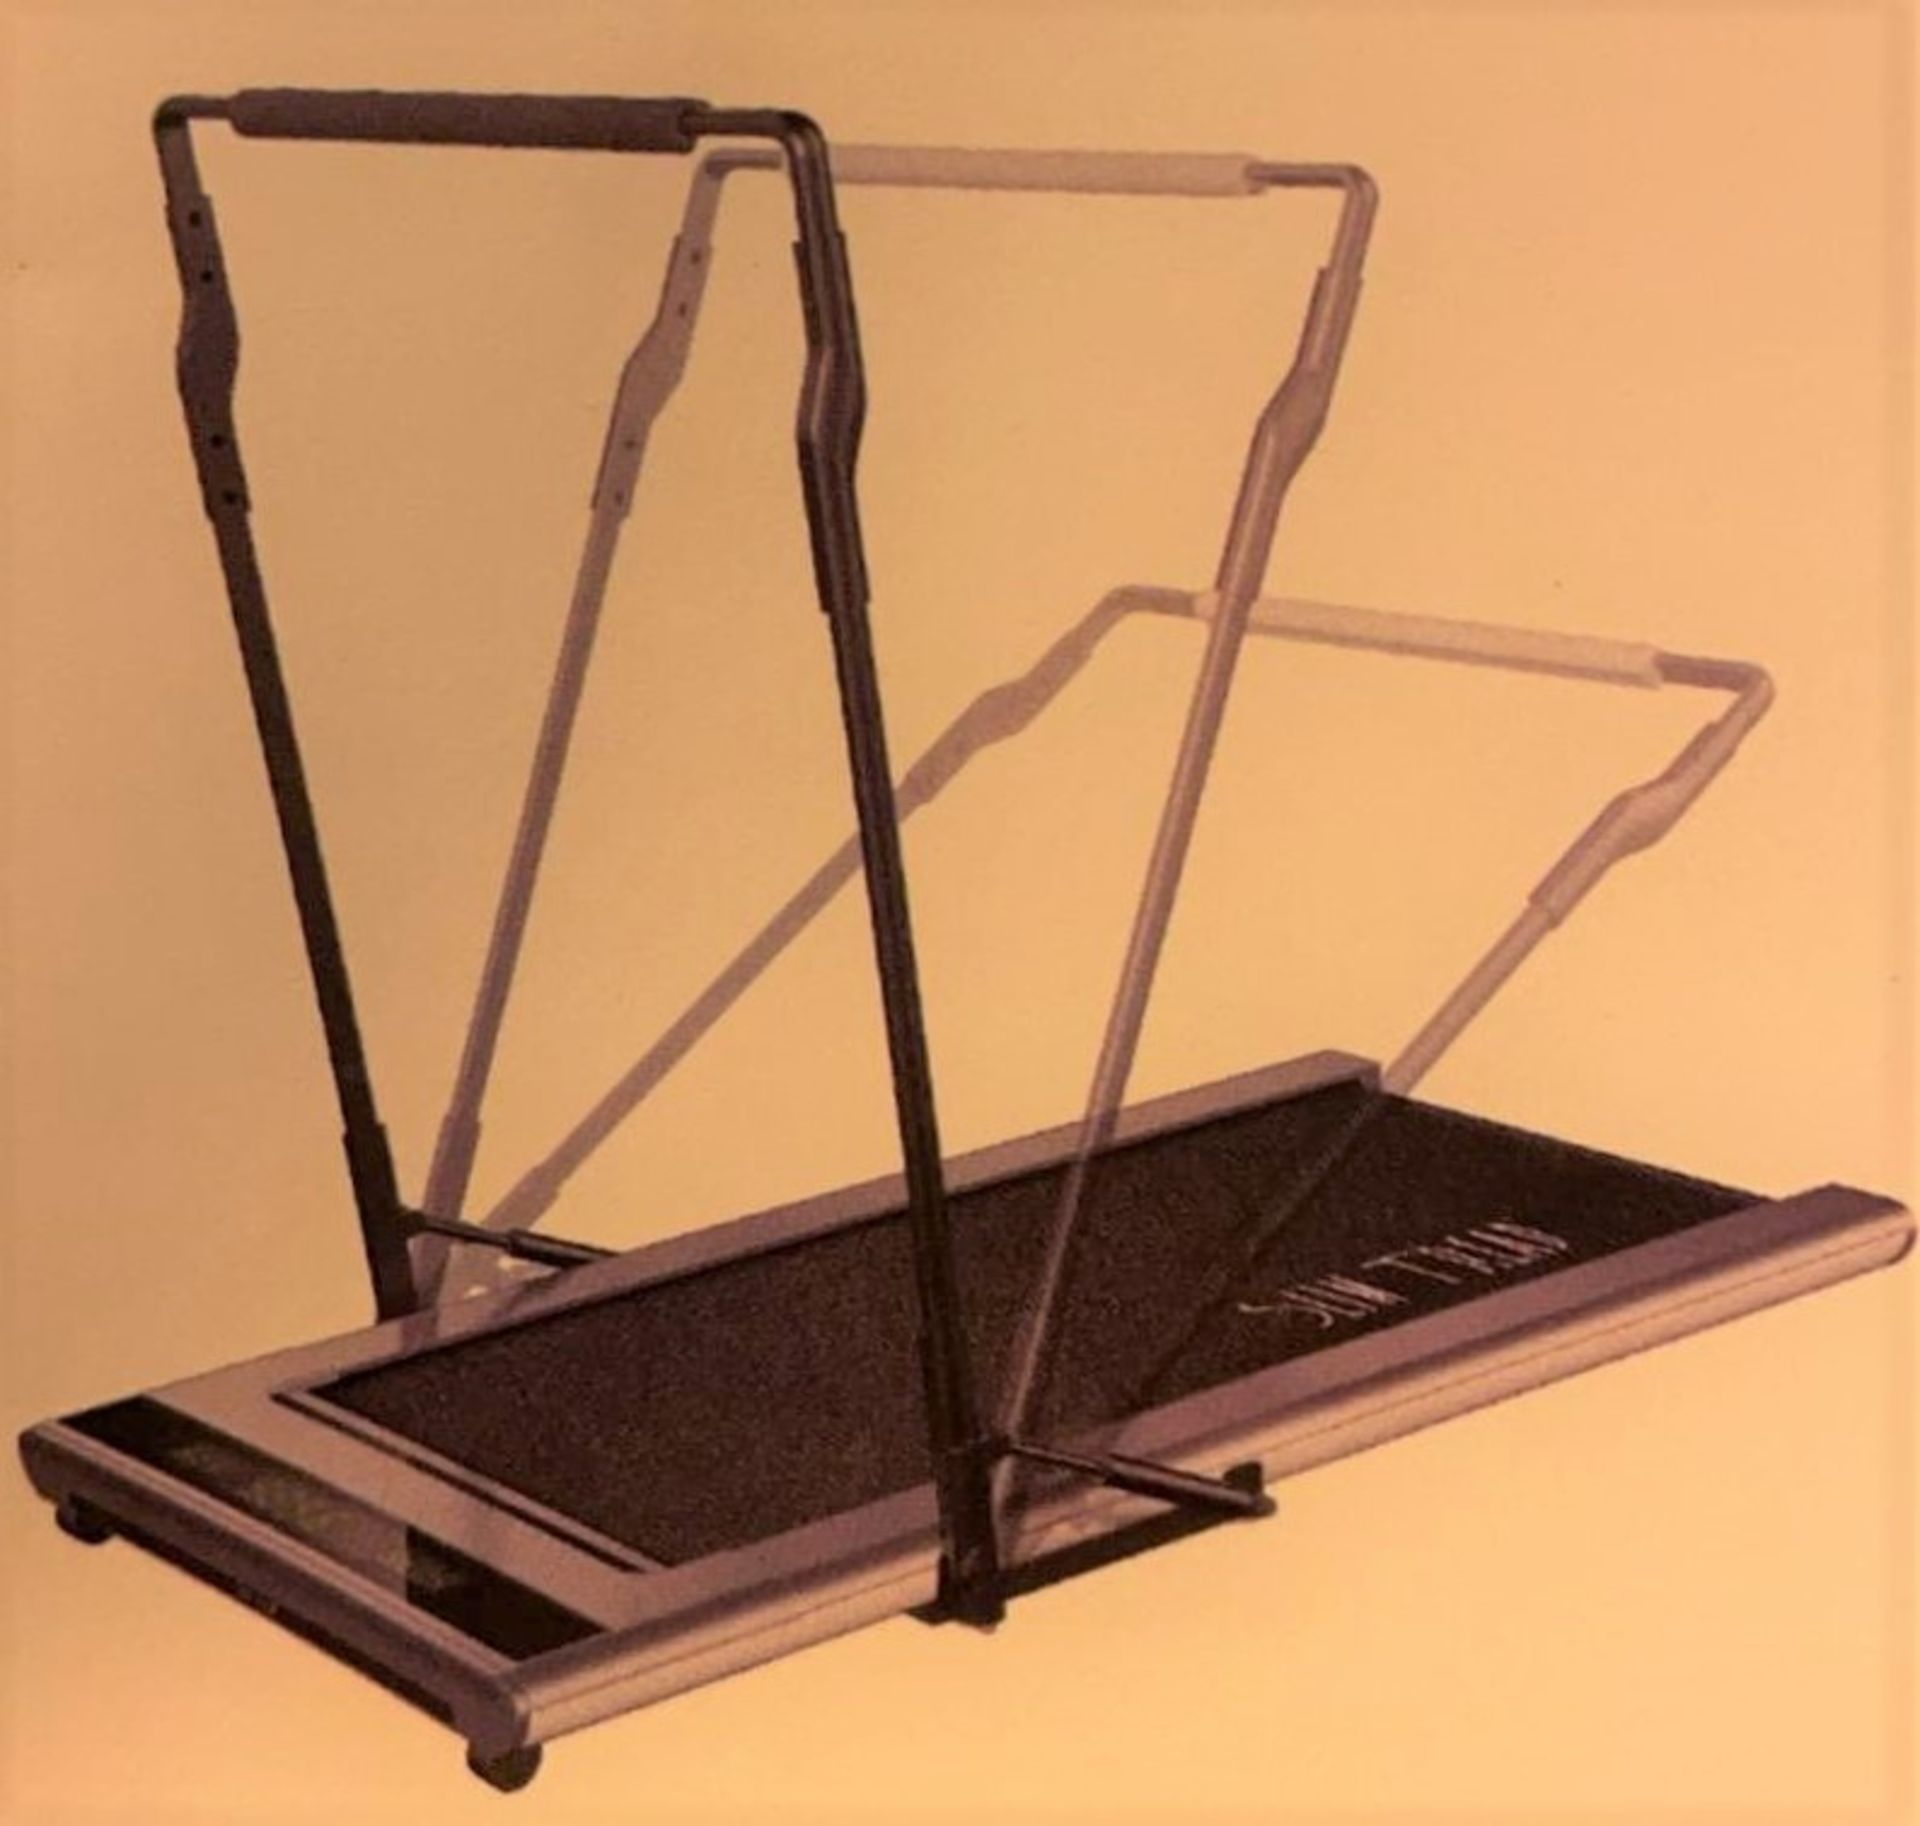 1 x Slim Tread Ultra Thin Smart Treadmill Running / Walking Machine - Lightweight With Folding - Image 10 of 19